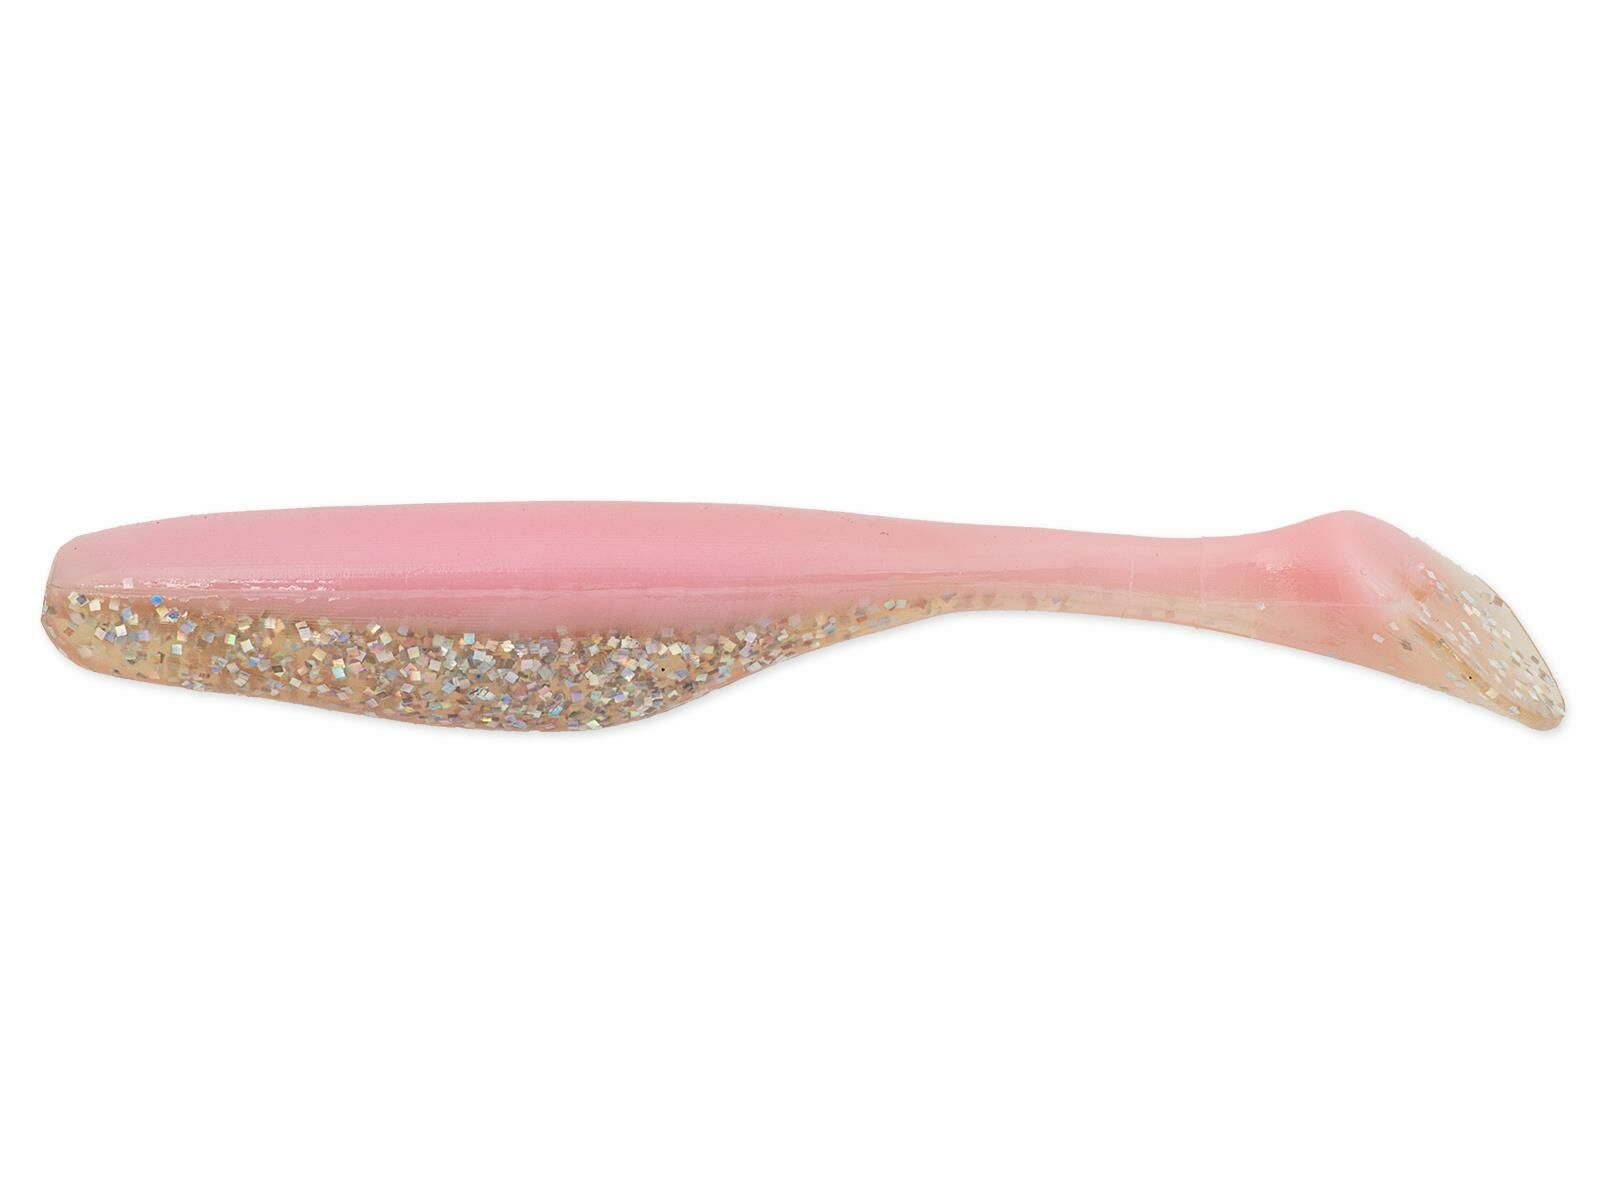 4" Walleye Assassin - Pink Diamond